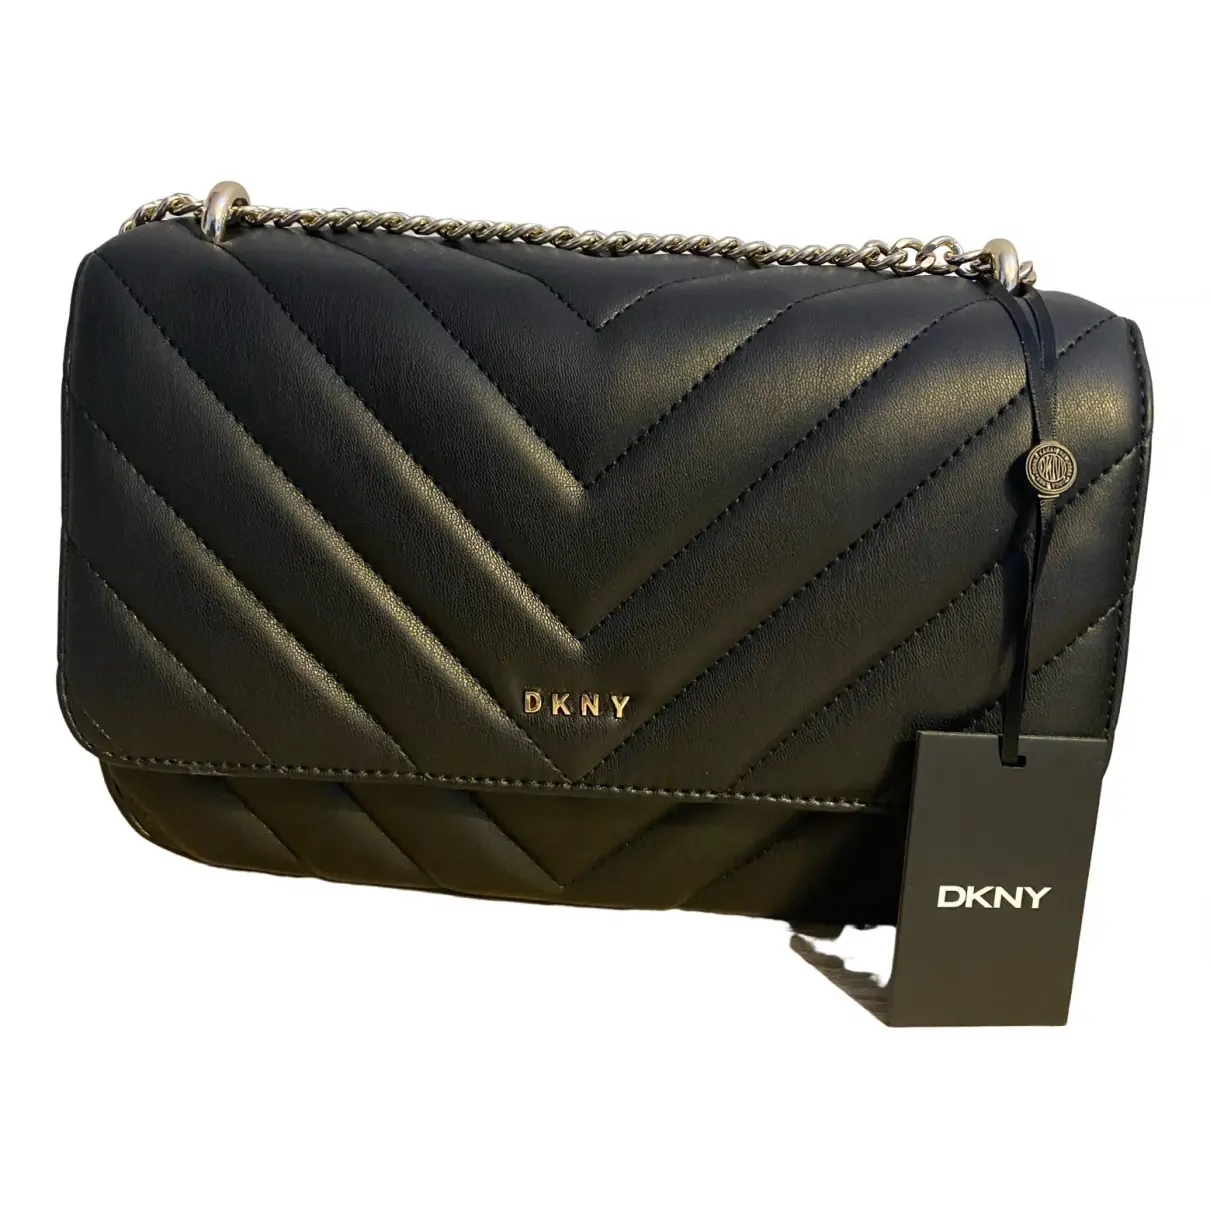 Vegan leather handbag Dkny